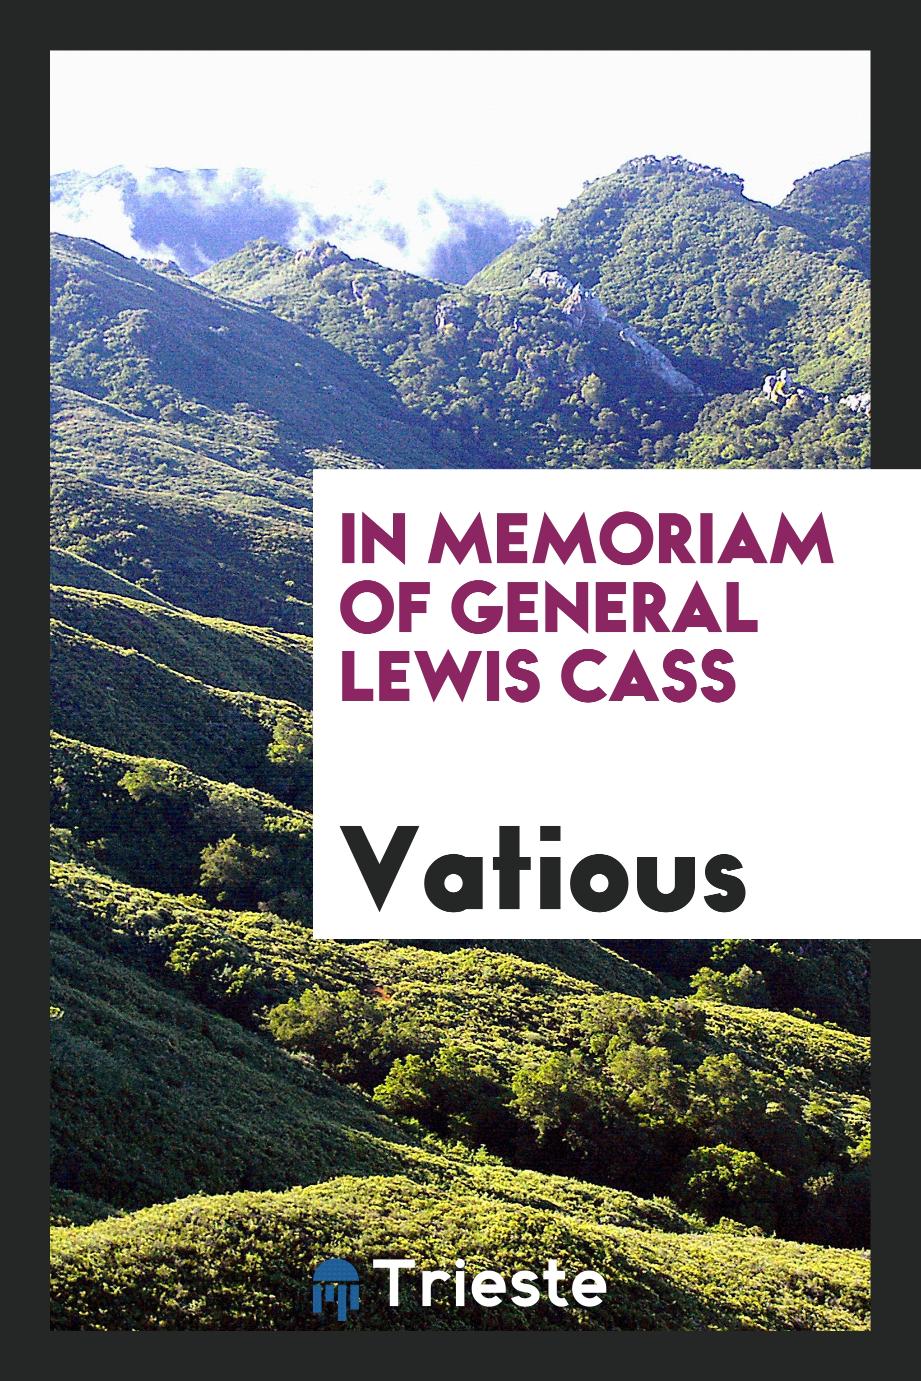 In memoriam of General Lewis Cass